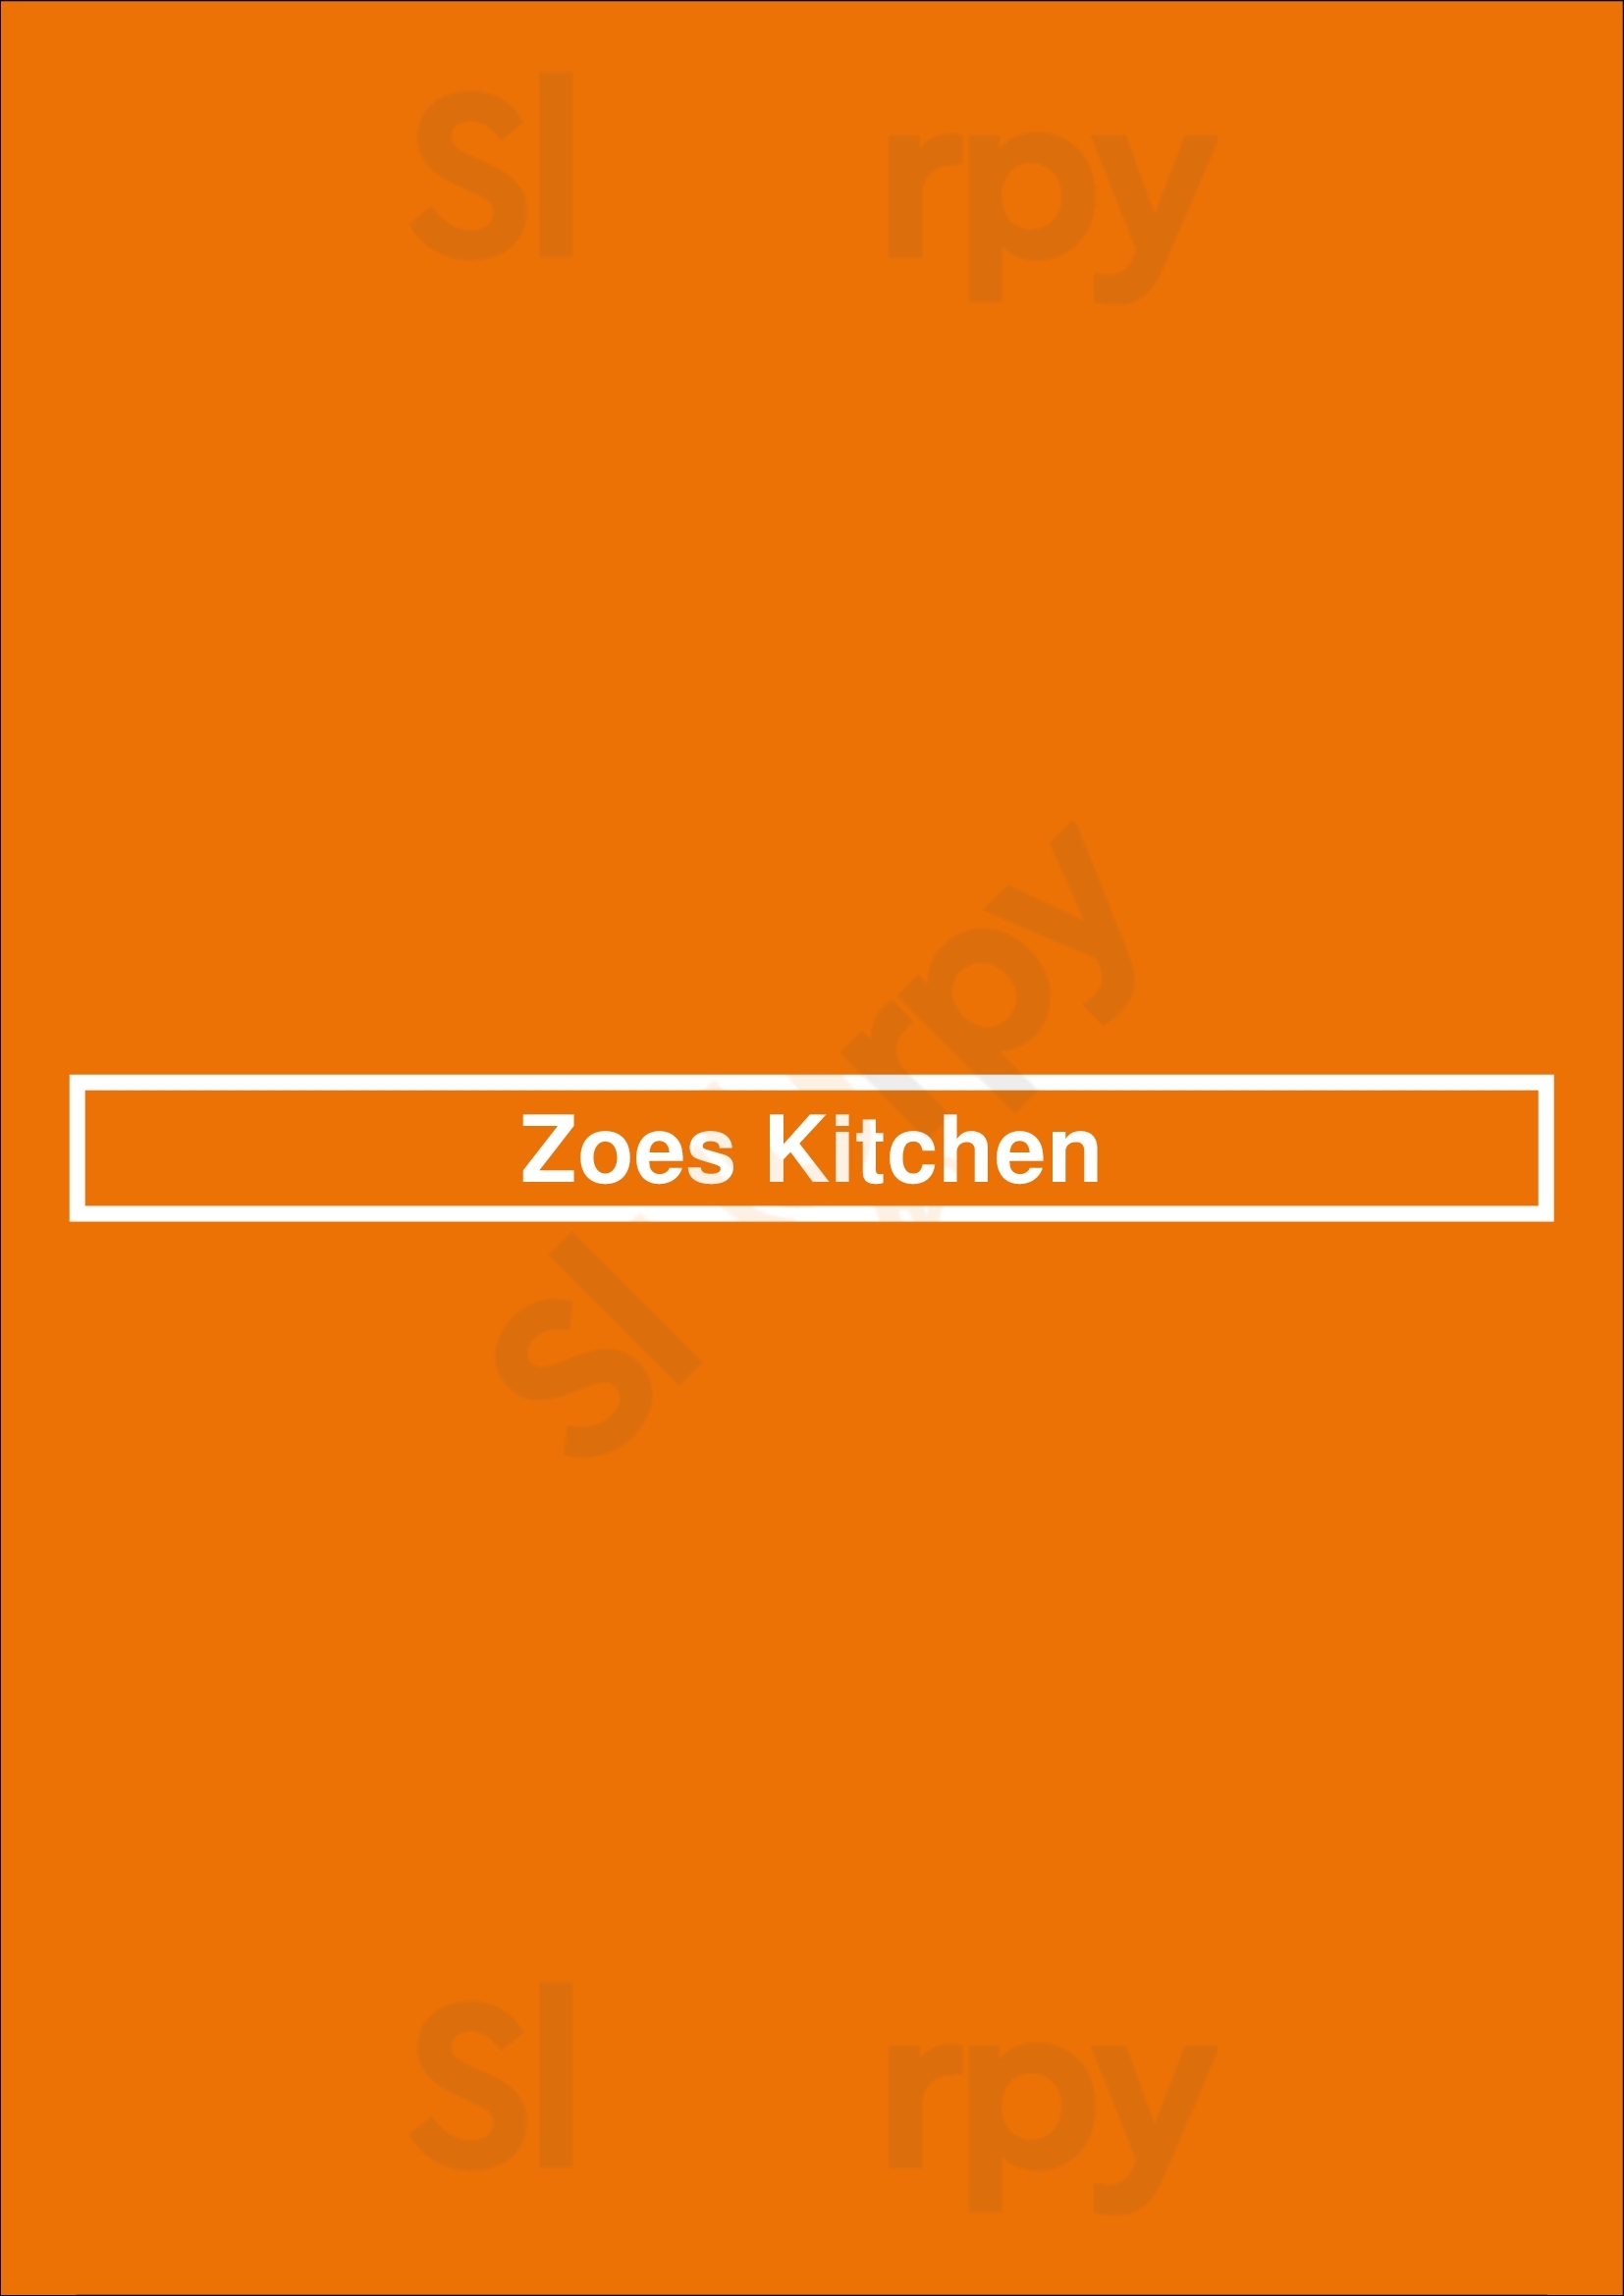 Zoes Kitchen Dallas Menu - 1